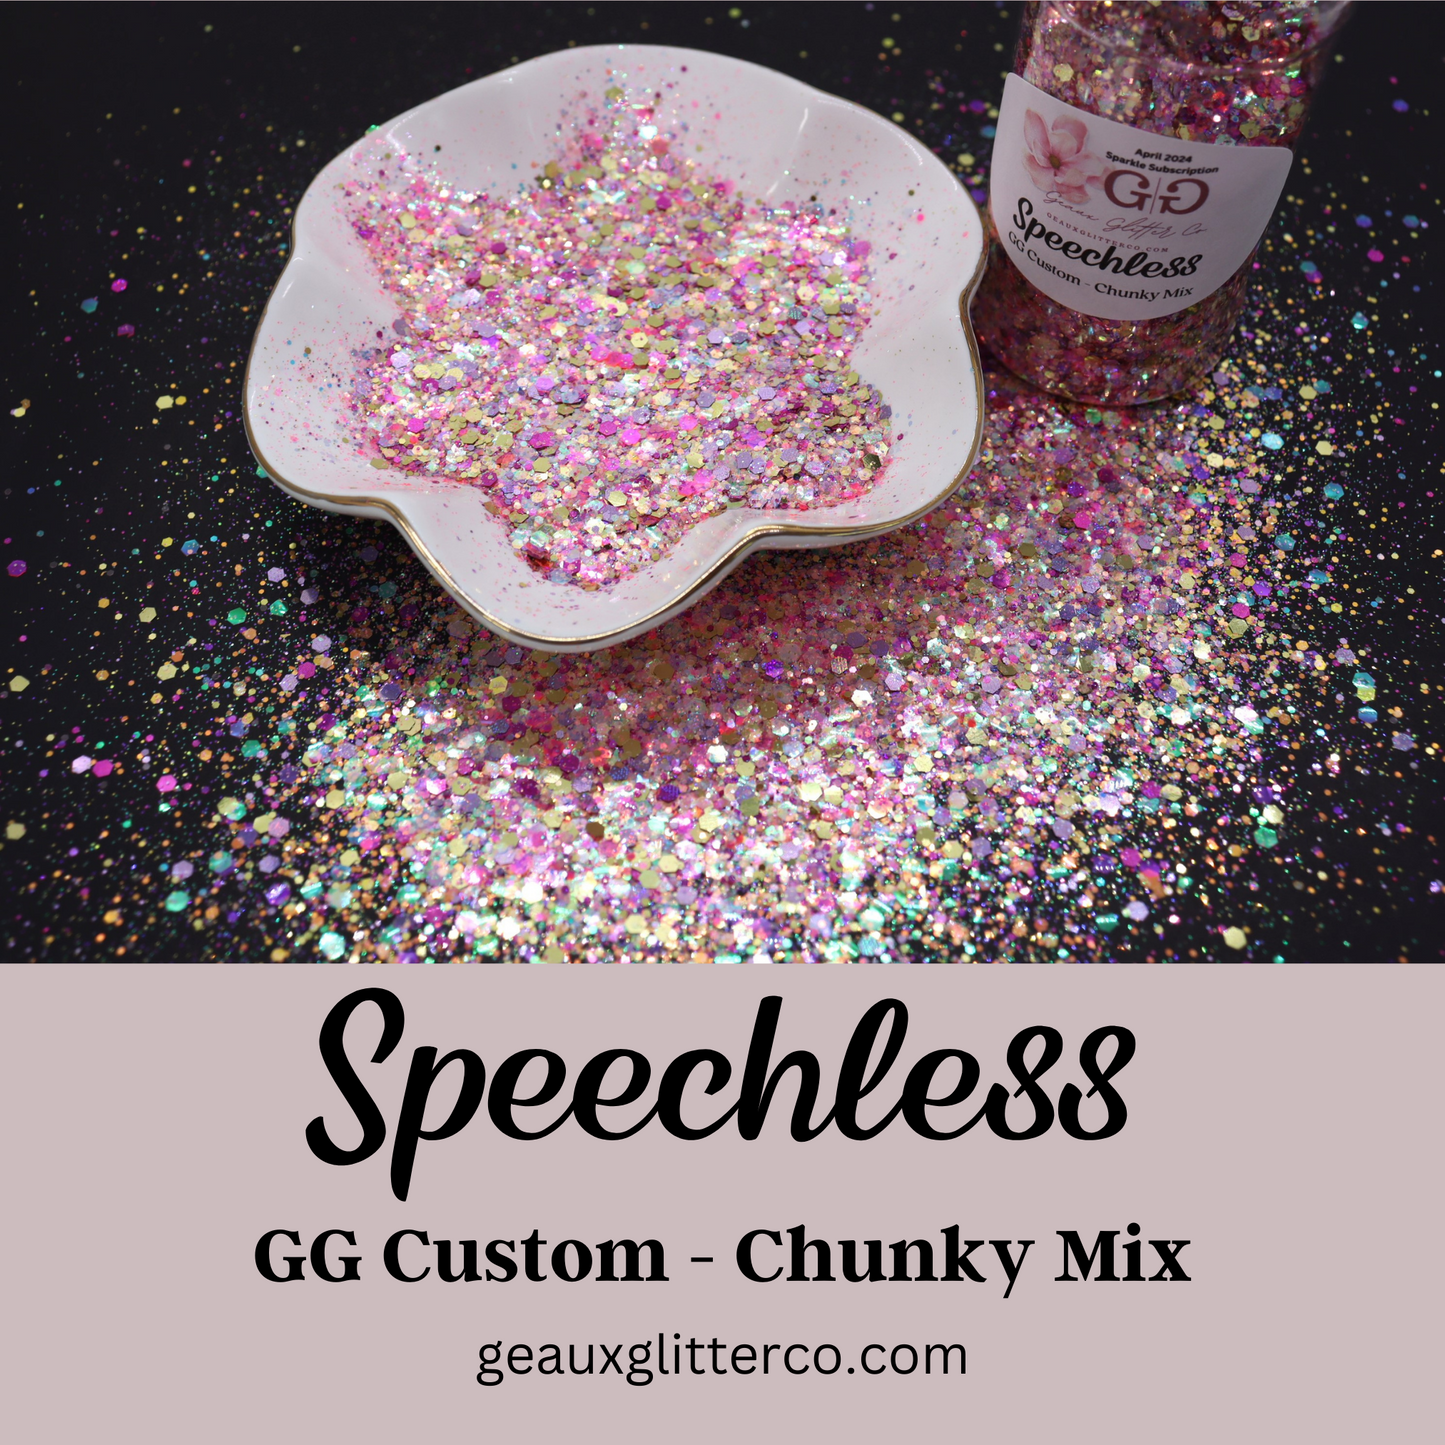 Speechless - GG Custom - Chunky Mix